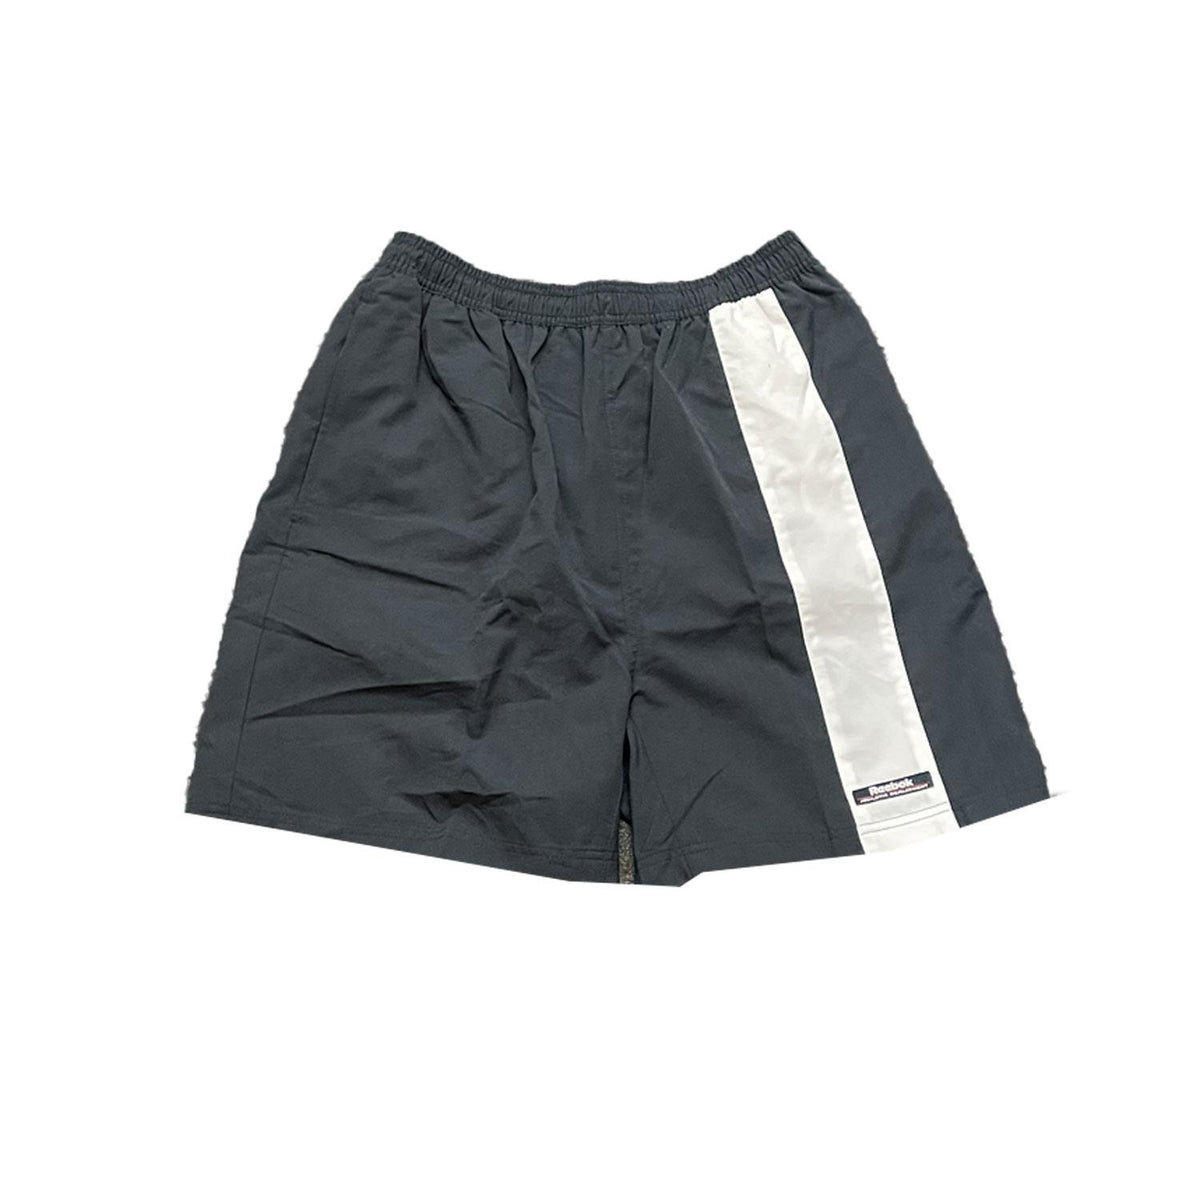 Reebok Original Mens Casual Sport Contrast Shorts - Navy - Large